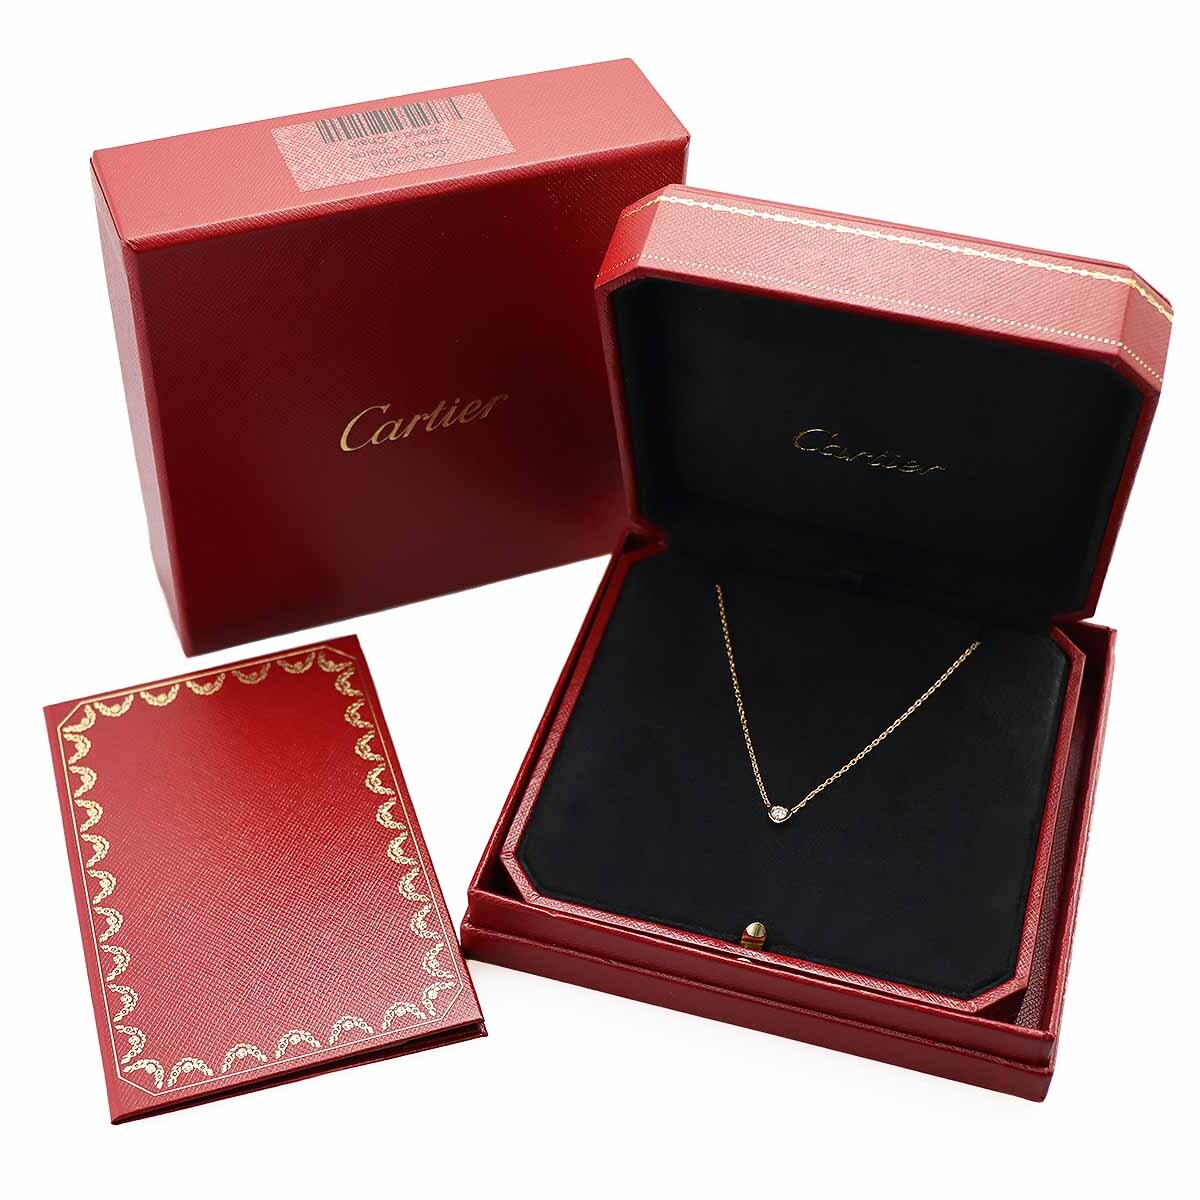 Cartier Cartier diamond ( approximately 0.14ct)tia man reje Heart necklace B7059400 K18 PG